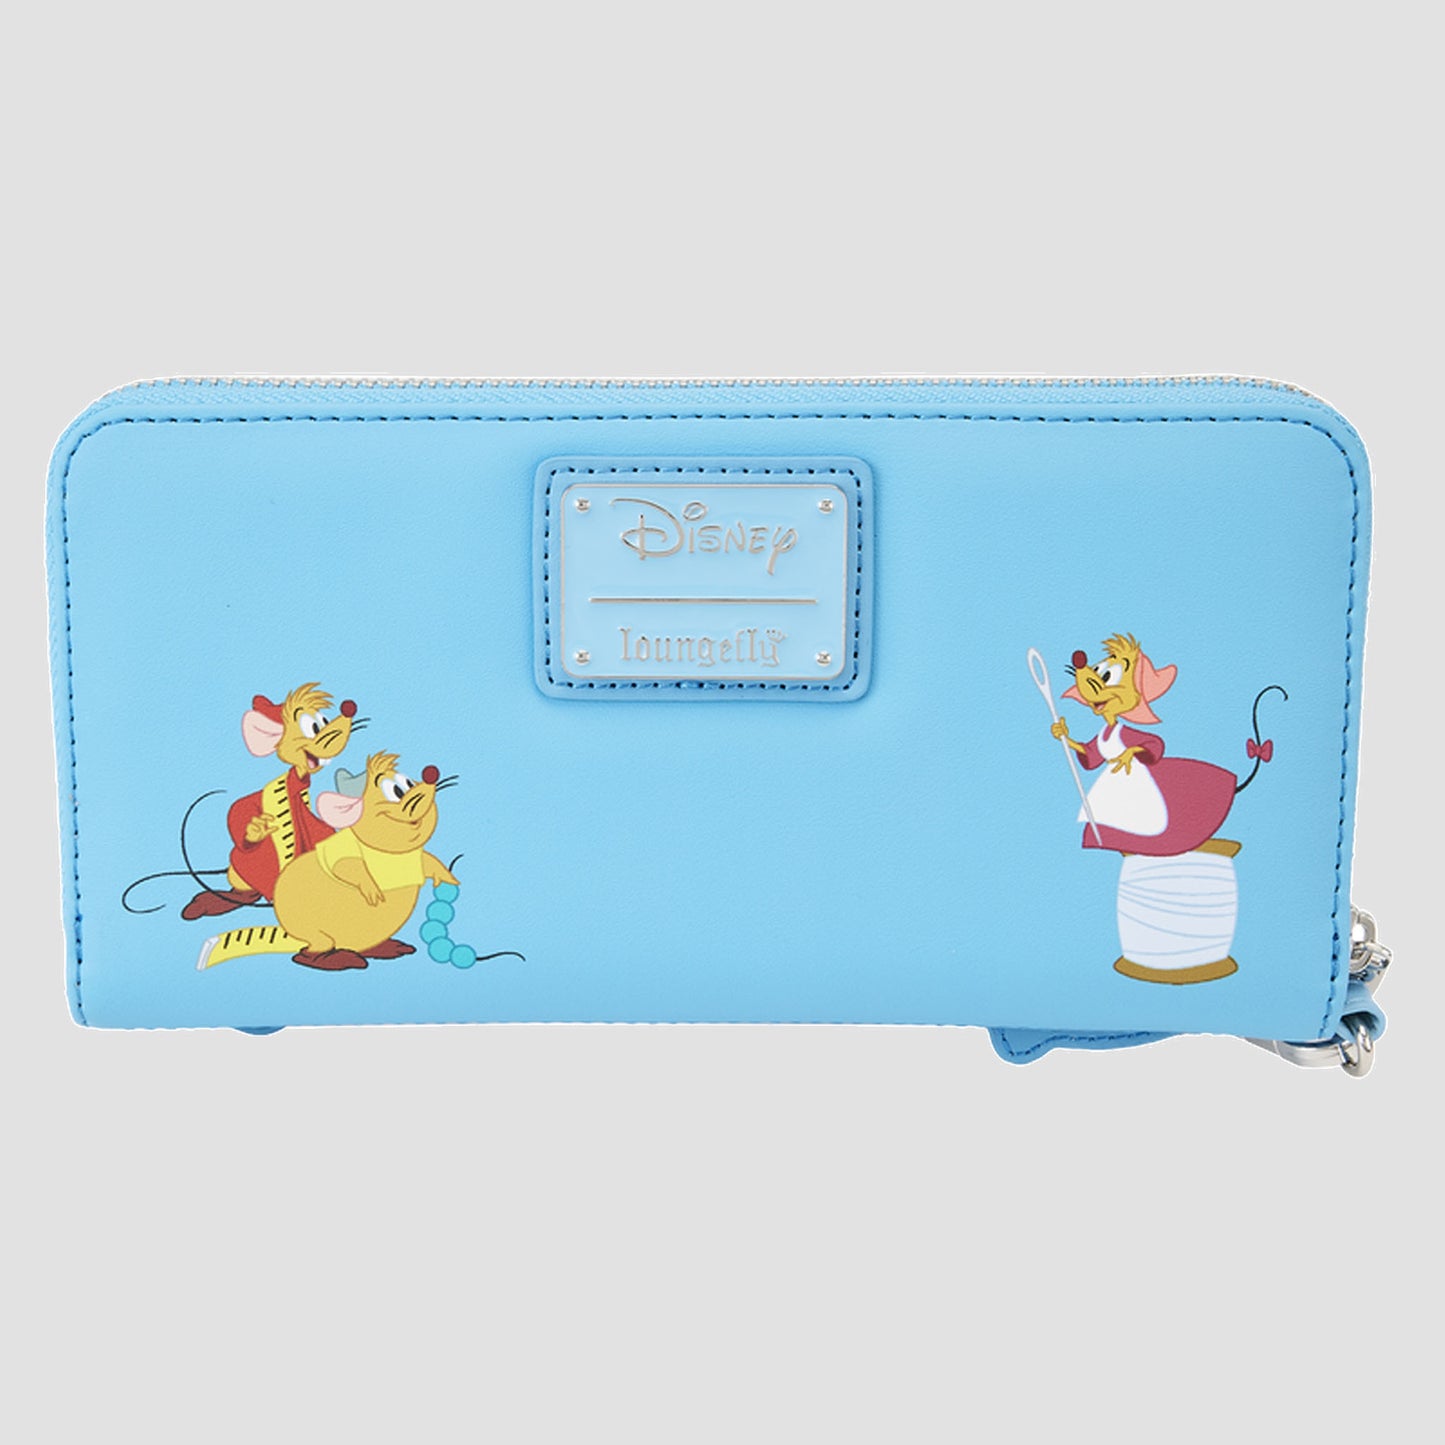 Load image into Gallery viewer, Cinderella (Disney) Lenticular Princess Series Zip-Around Wristlet Wallet by Loungefly
